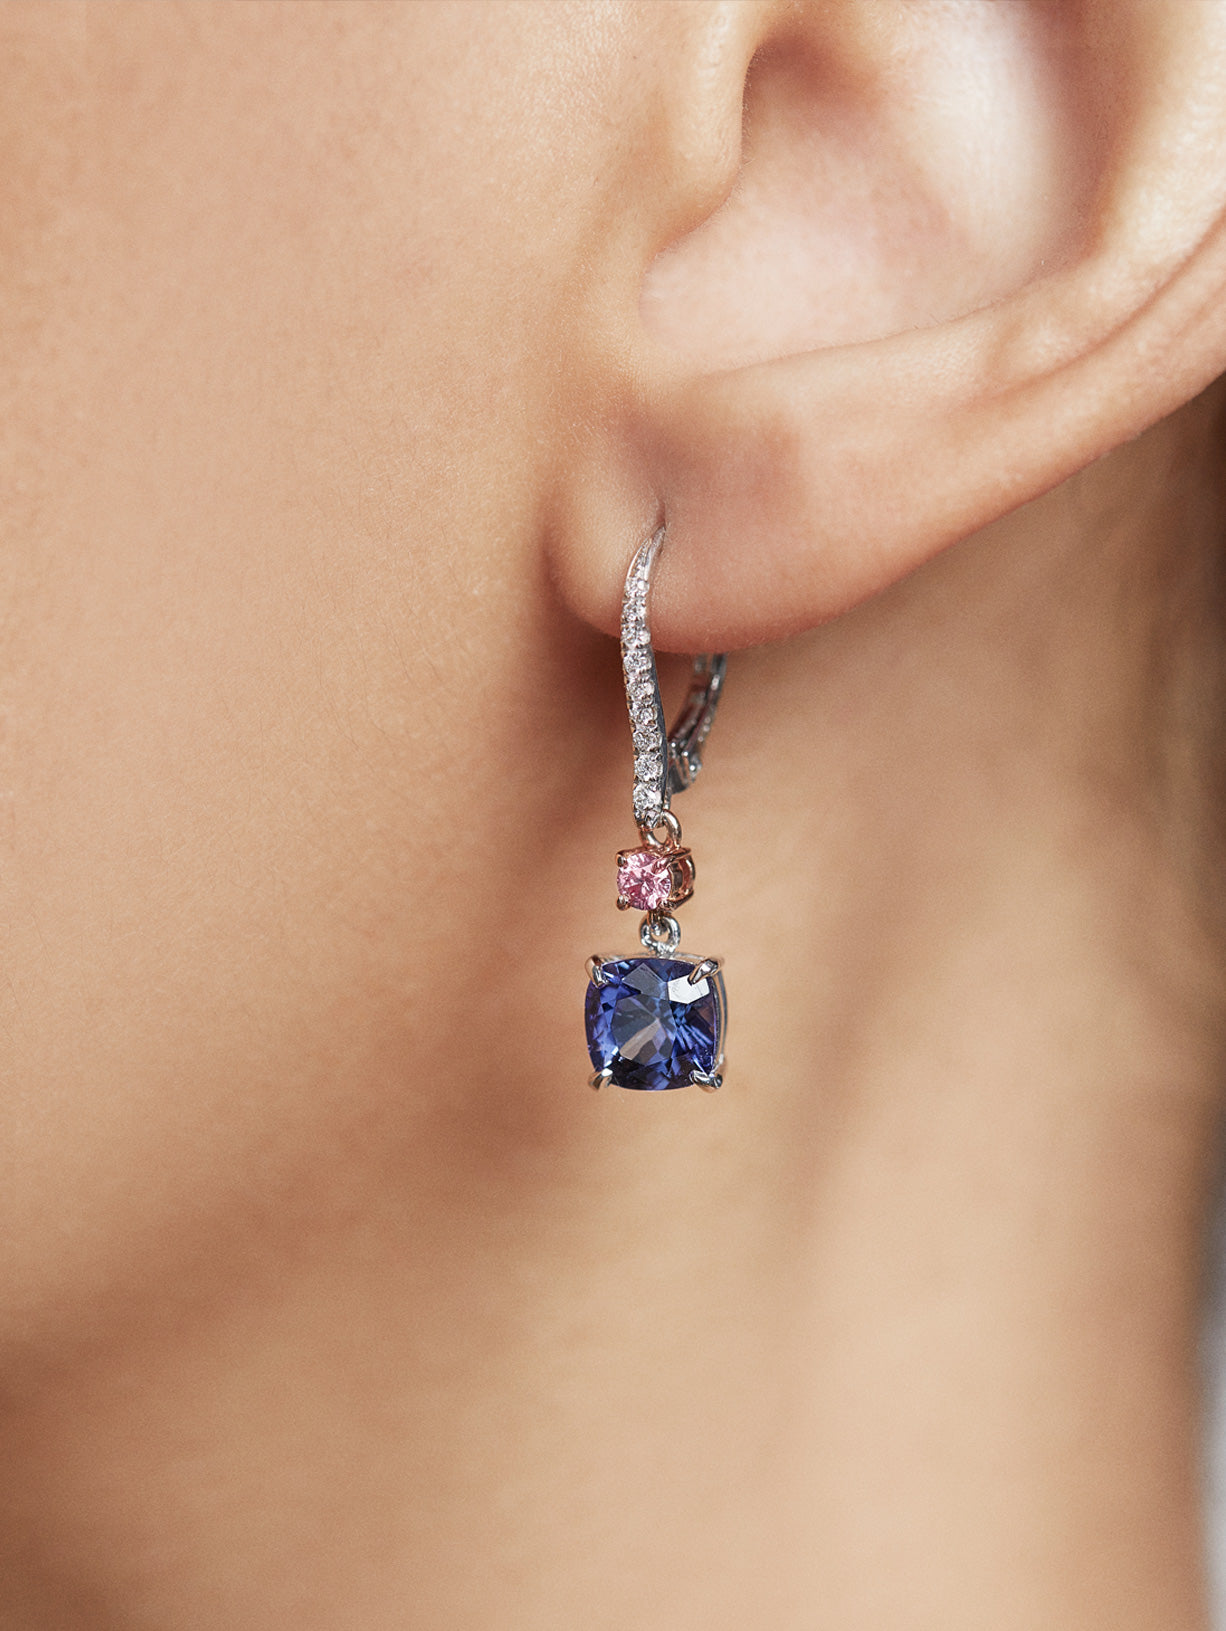 Tanzanite and Argyle Pink Diamond Earrings by JFINE